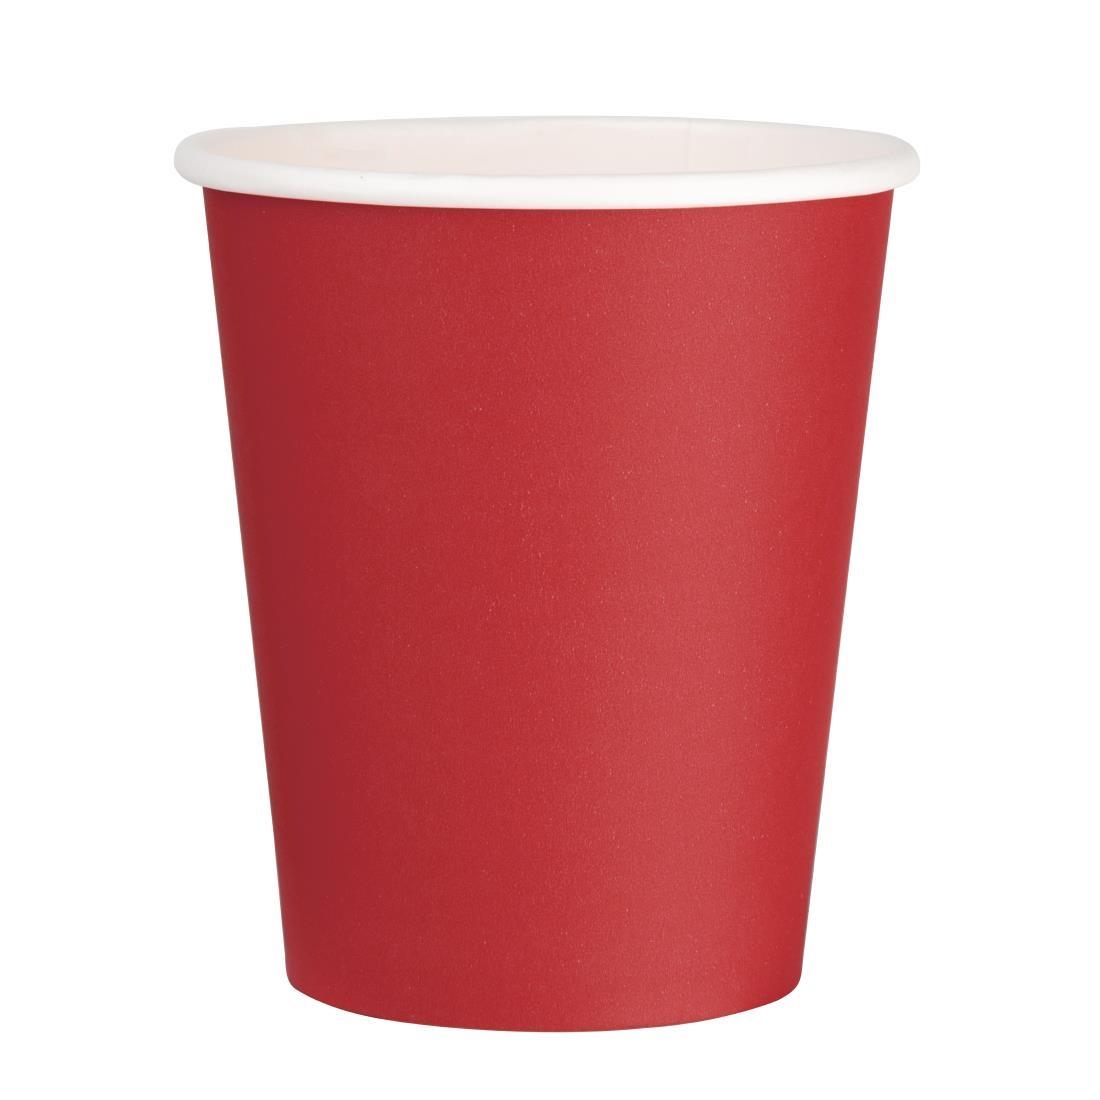 Fiesta Recyclable Single Wall Takeaway Coffee Cups Red 225ml / 8oz (Pack of 1000) - GP409  - 1